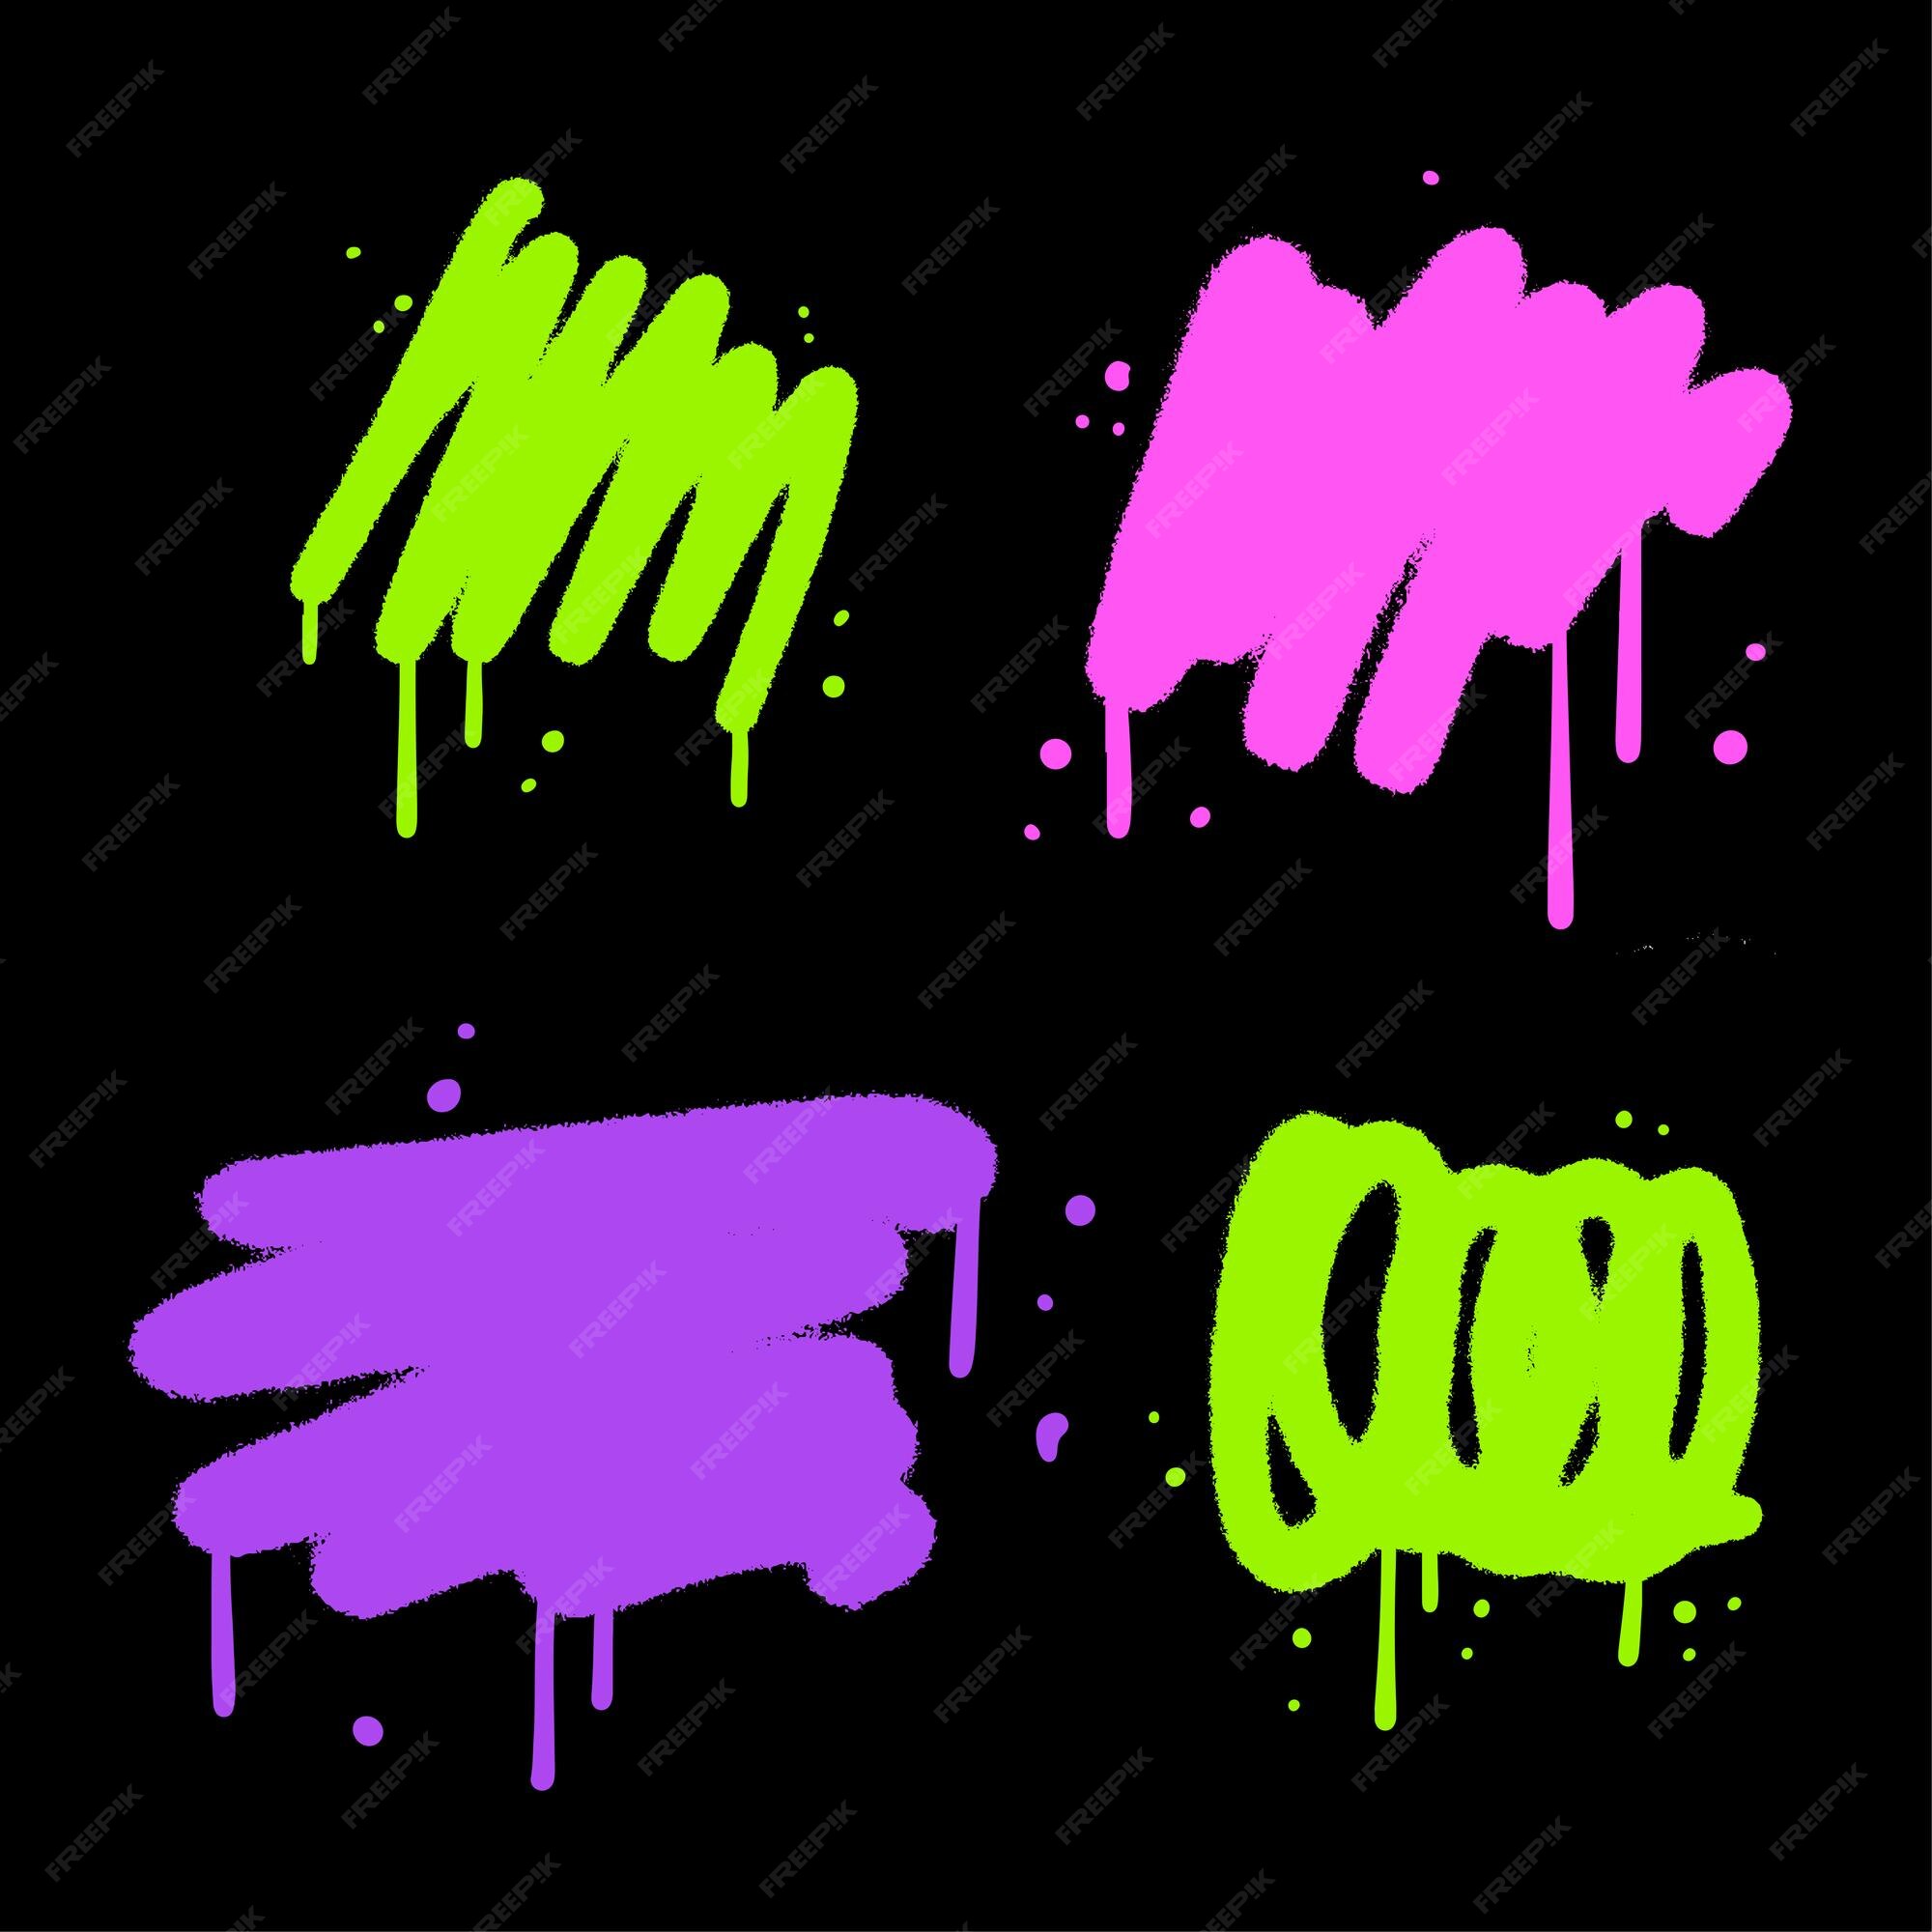 adobe photoshop - Create the 'neon graffiti', 'neon spray paint' style -  Graphic Design Stack Exchange